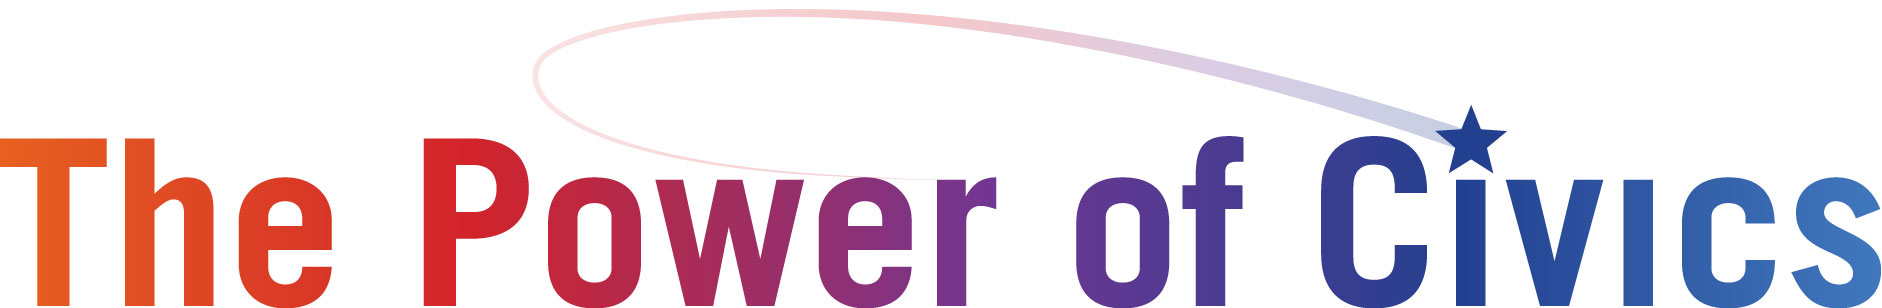 The Power of Civics - Logo